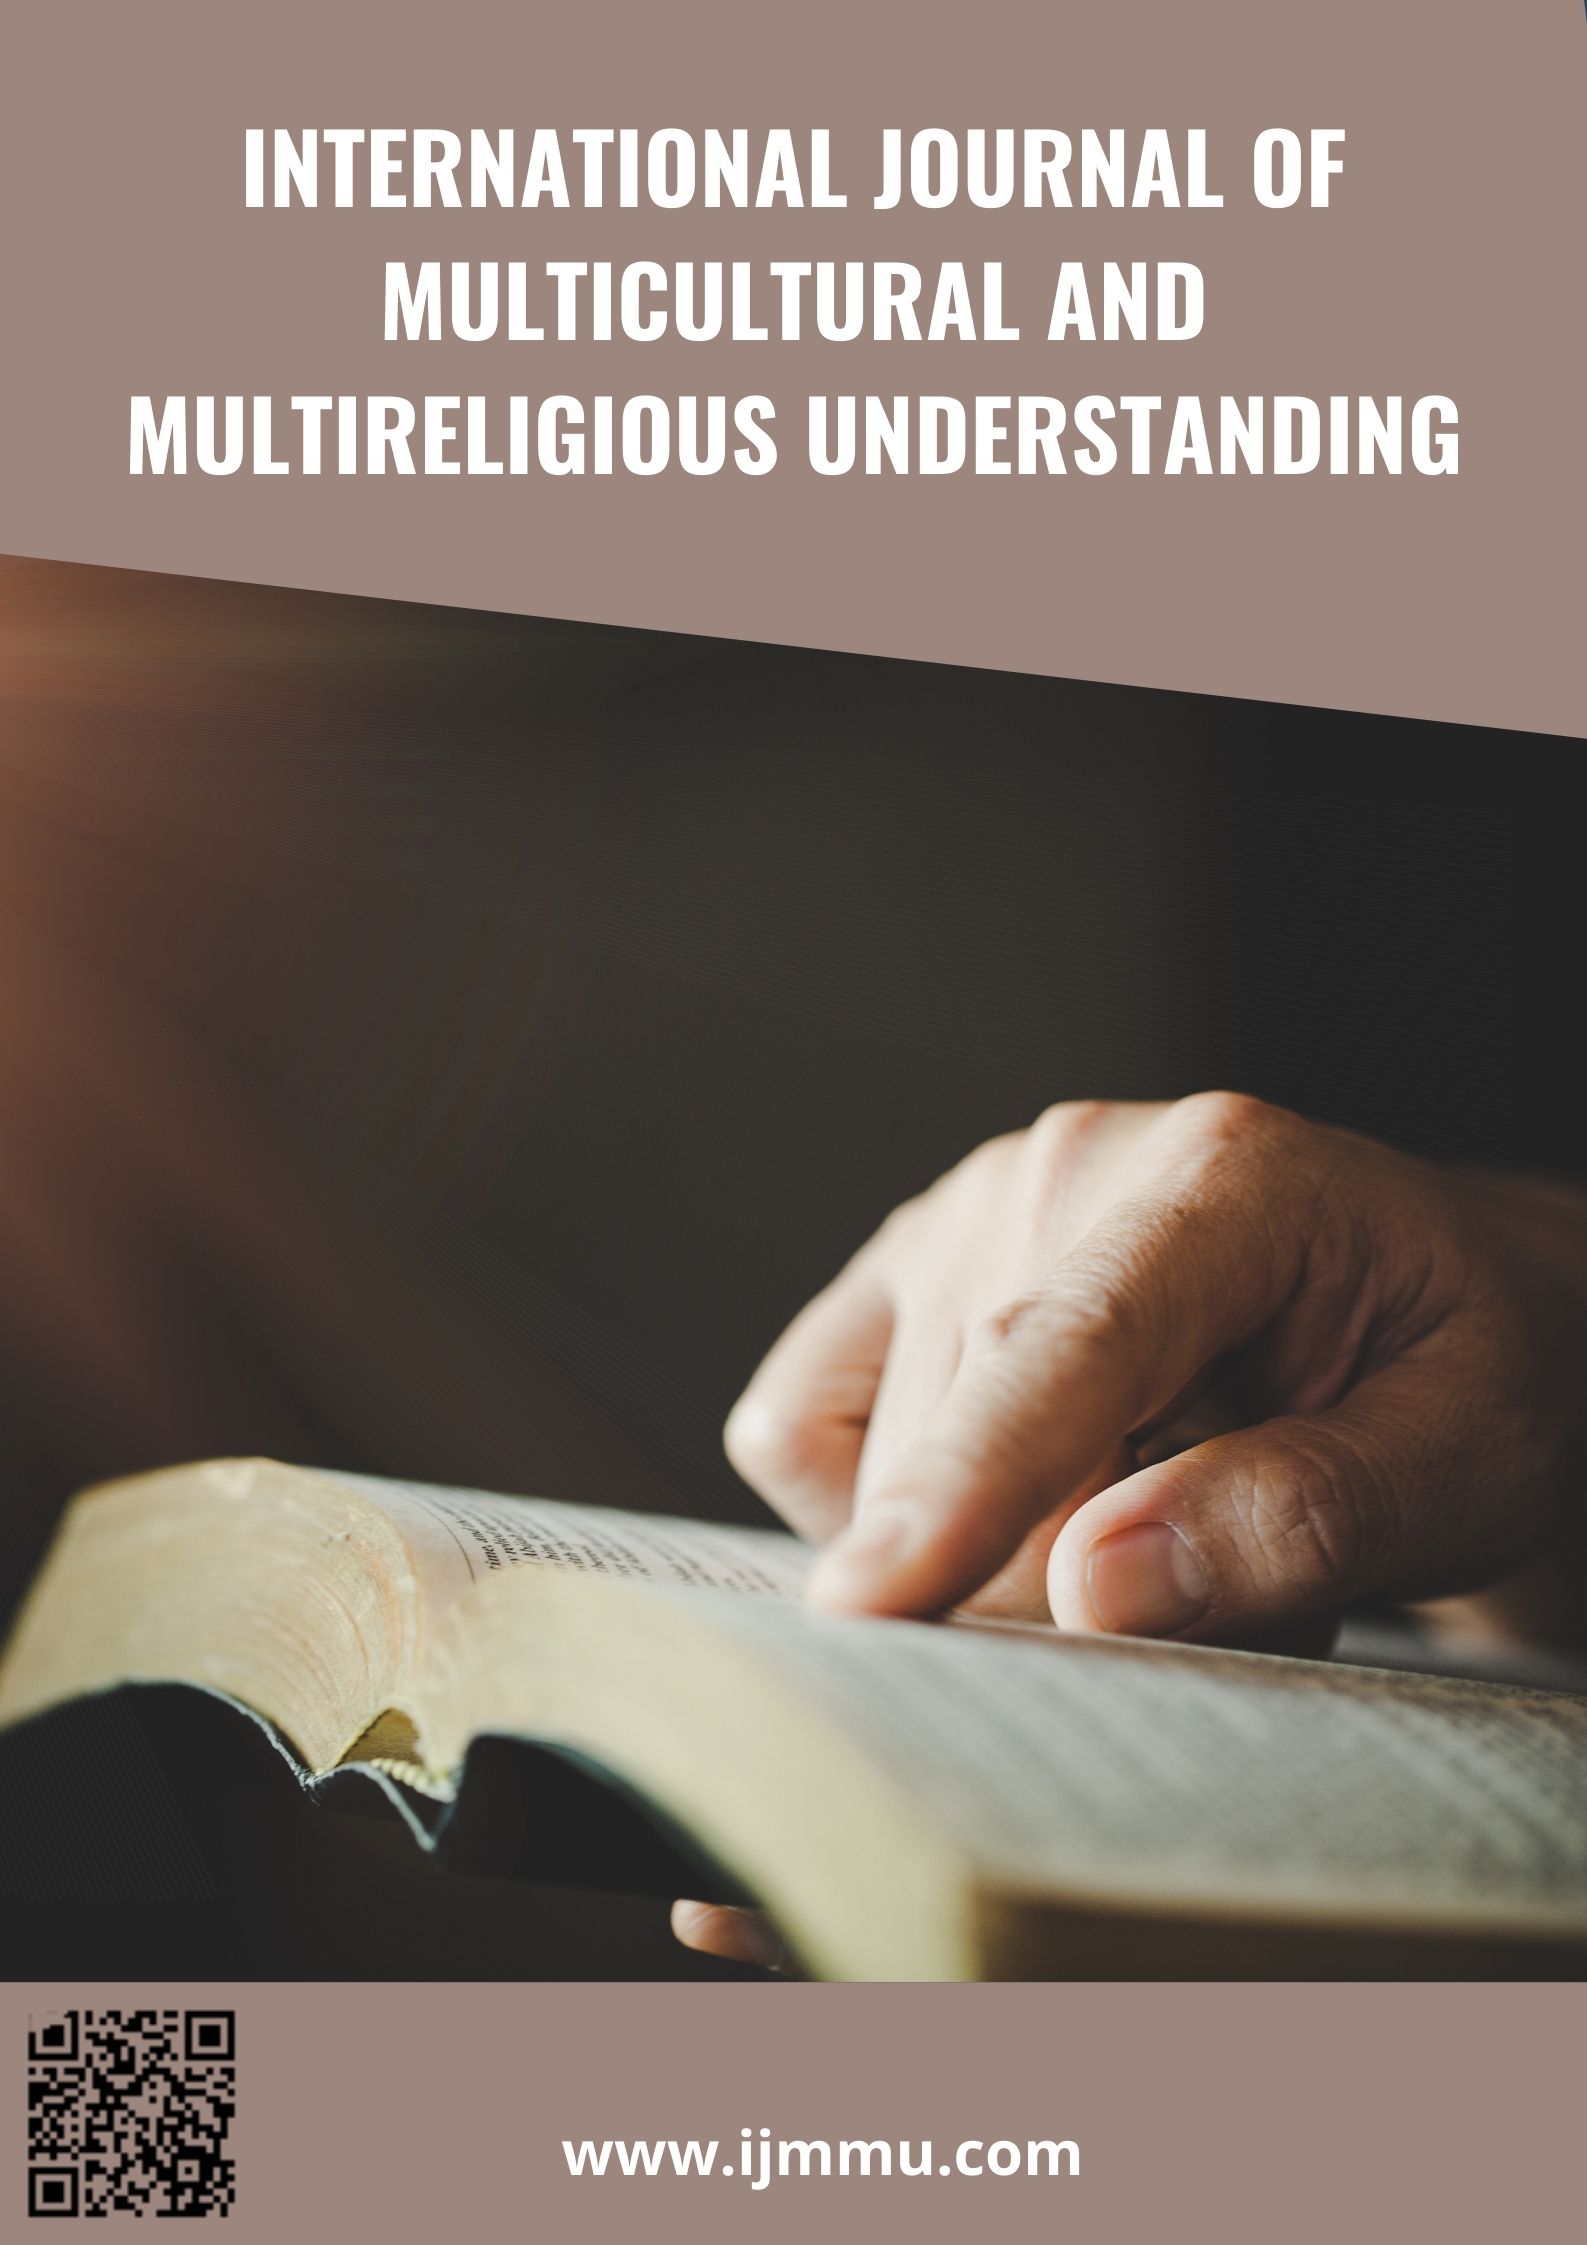  International Journal of Multicultural and Multireligious Understanding